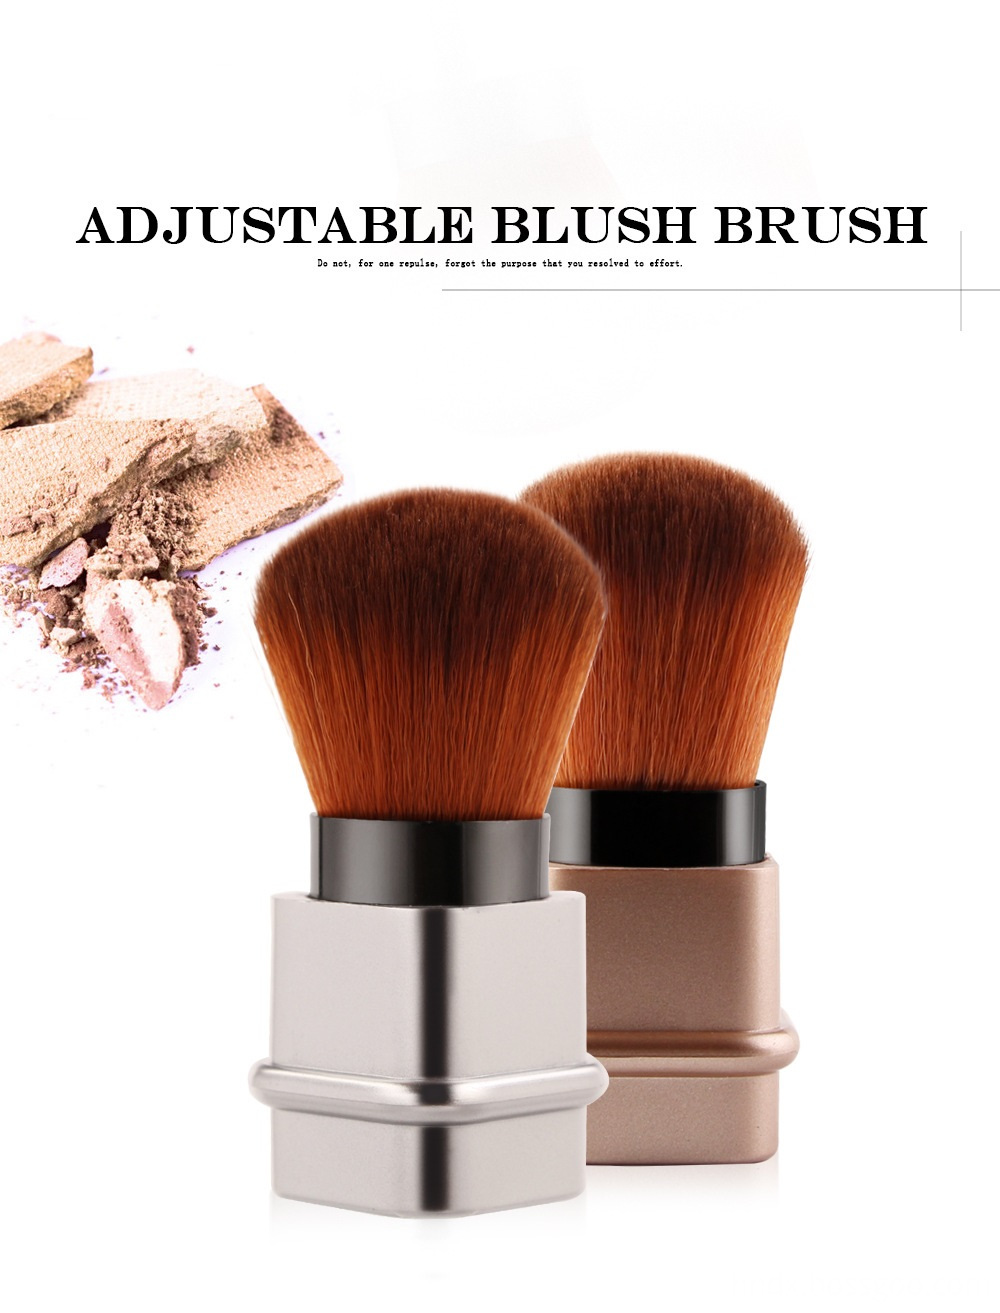 Adjustable Blush Brush